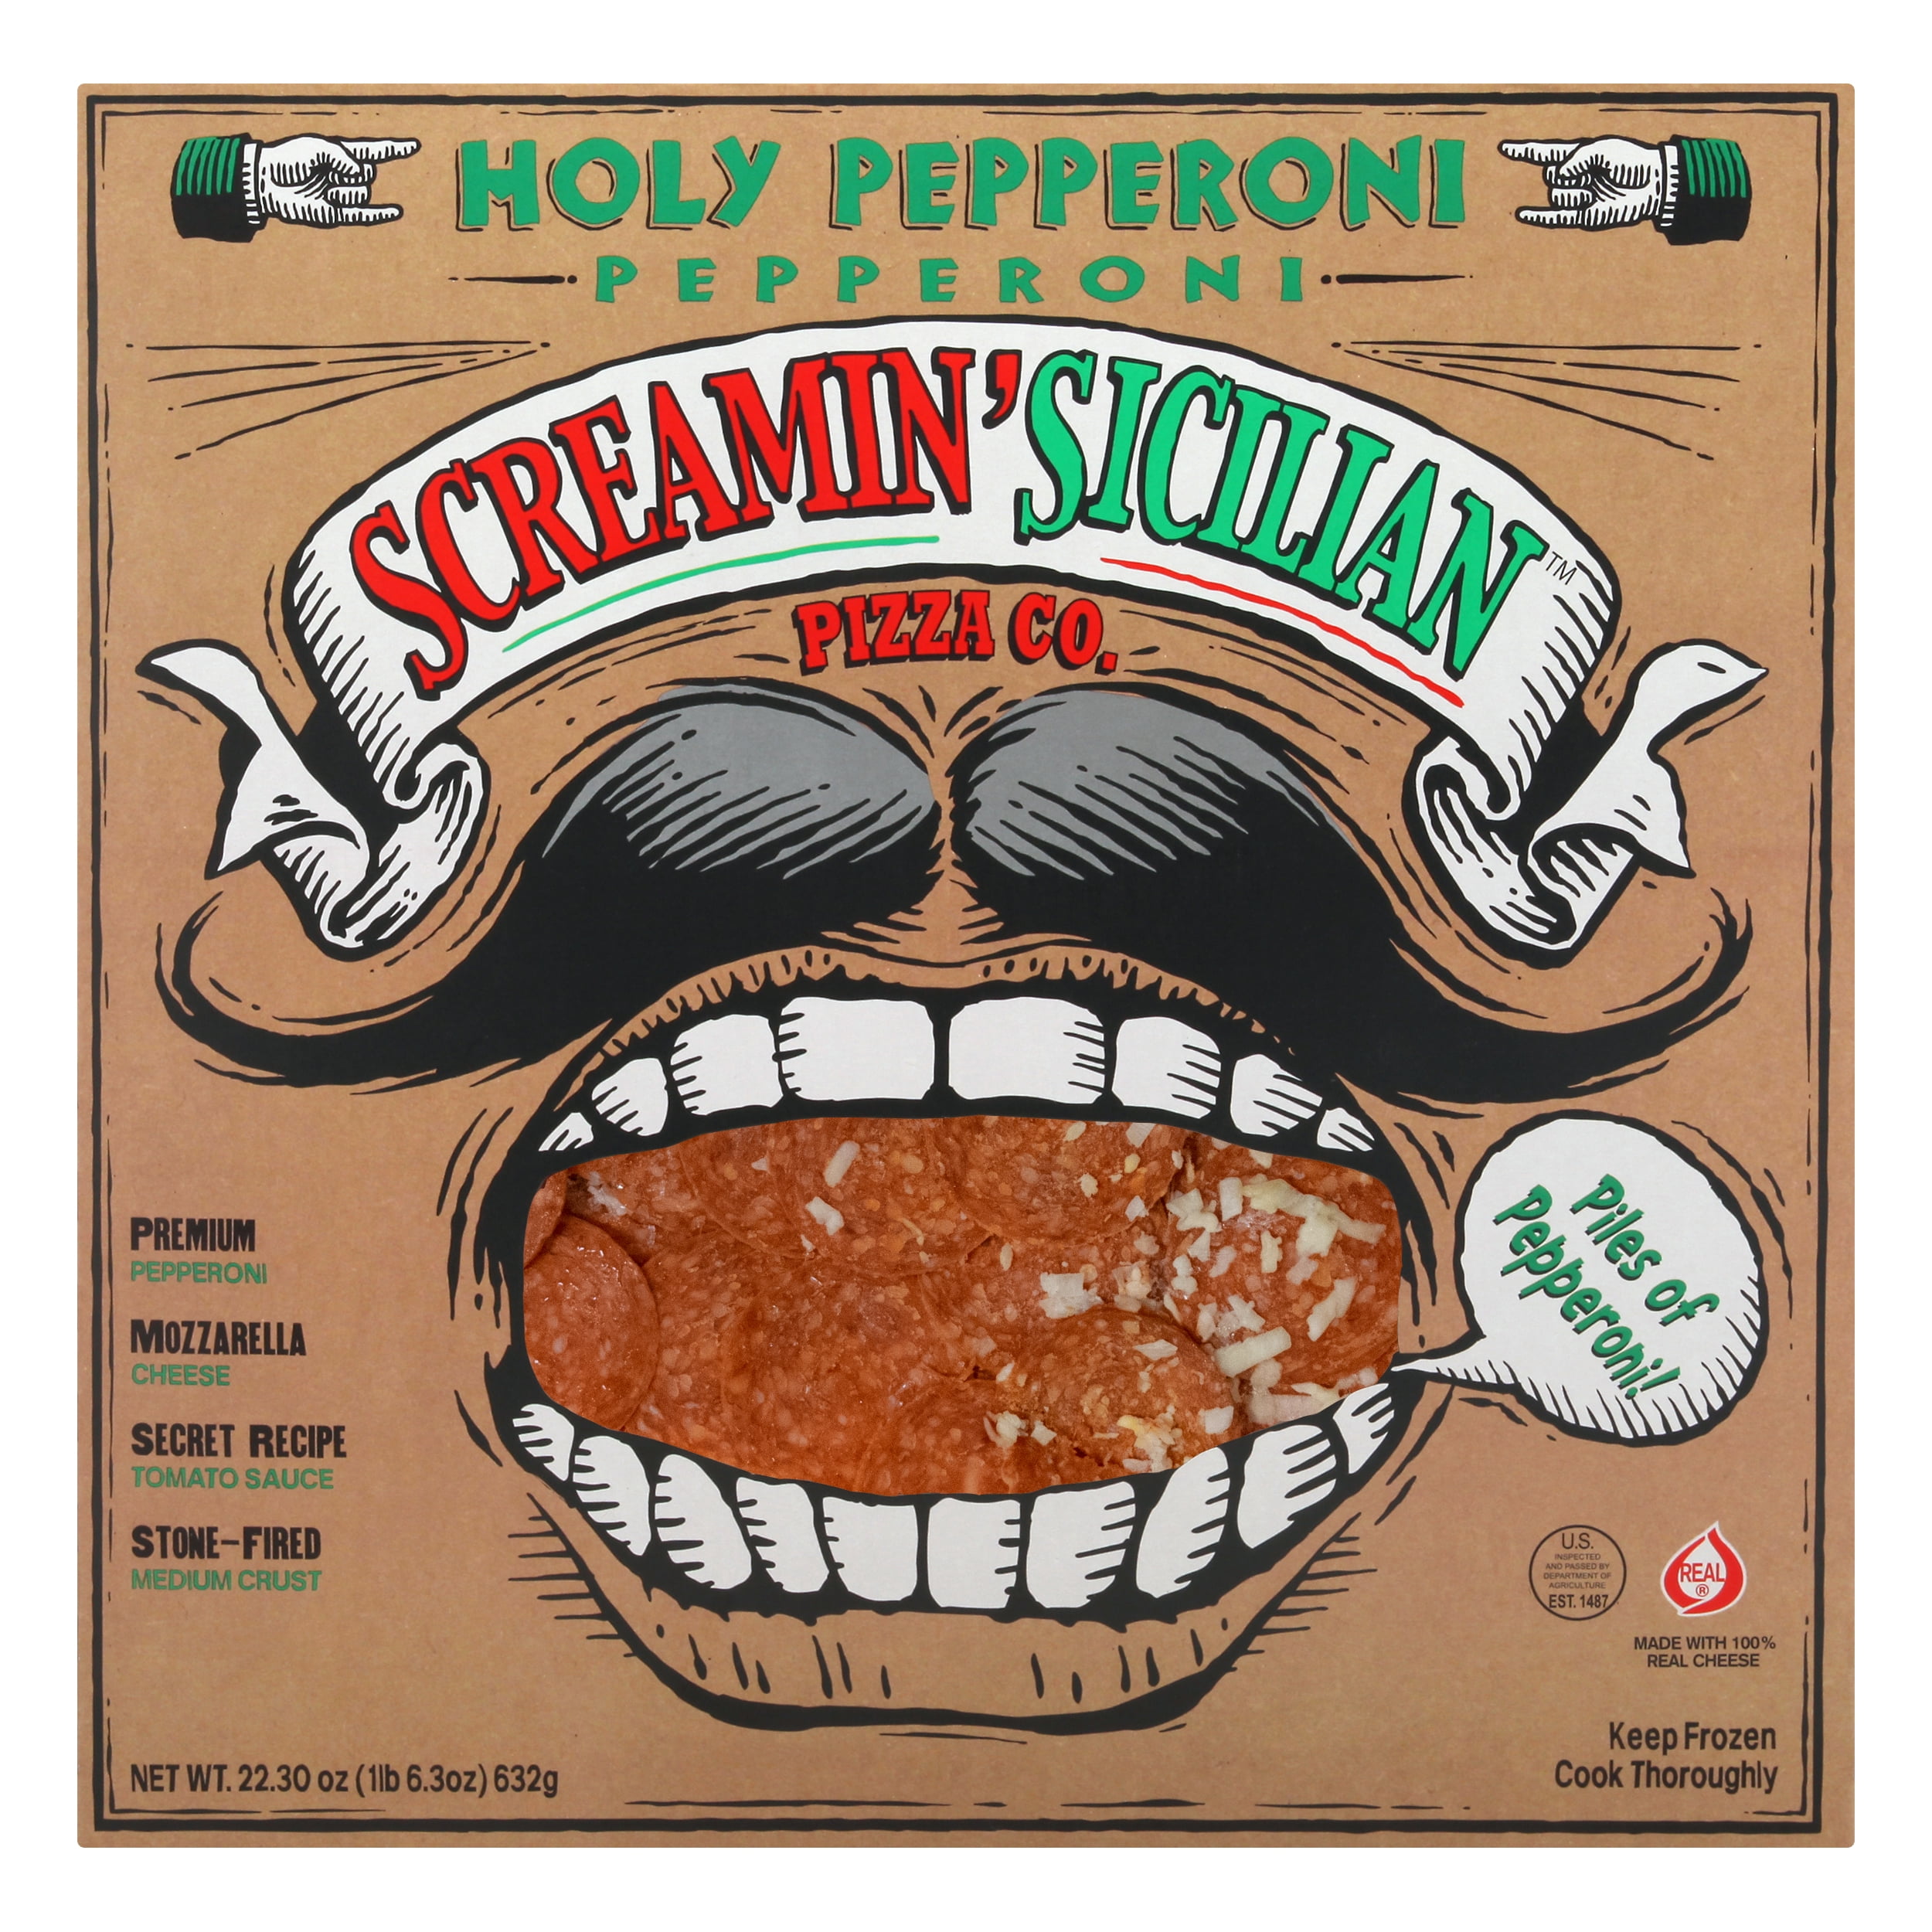 Screamin' Sicilian Original Holy Pepperoni Pizza - Walmart.com - Walmart.com